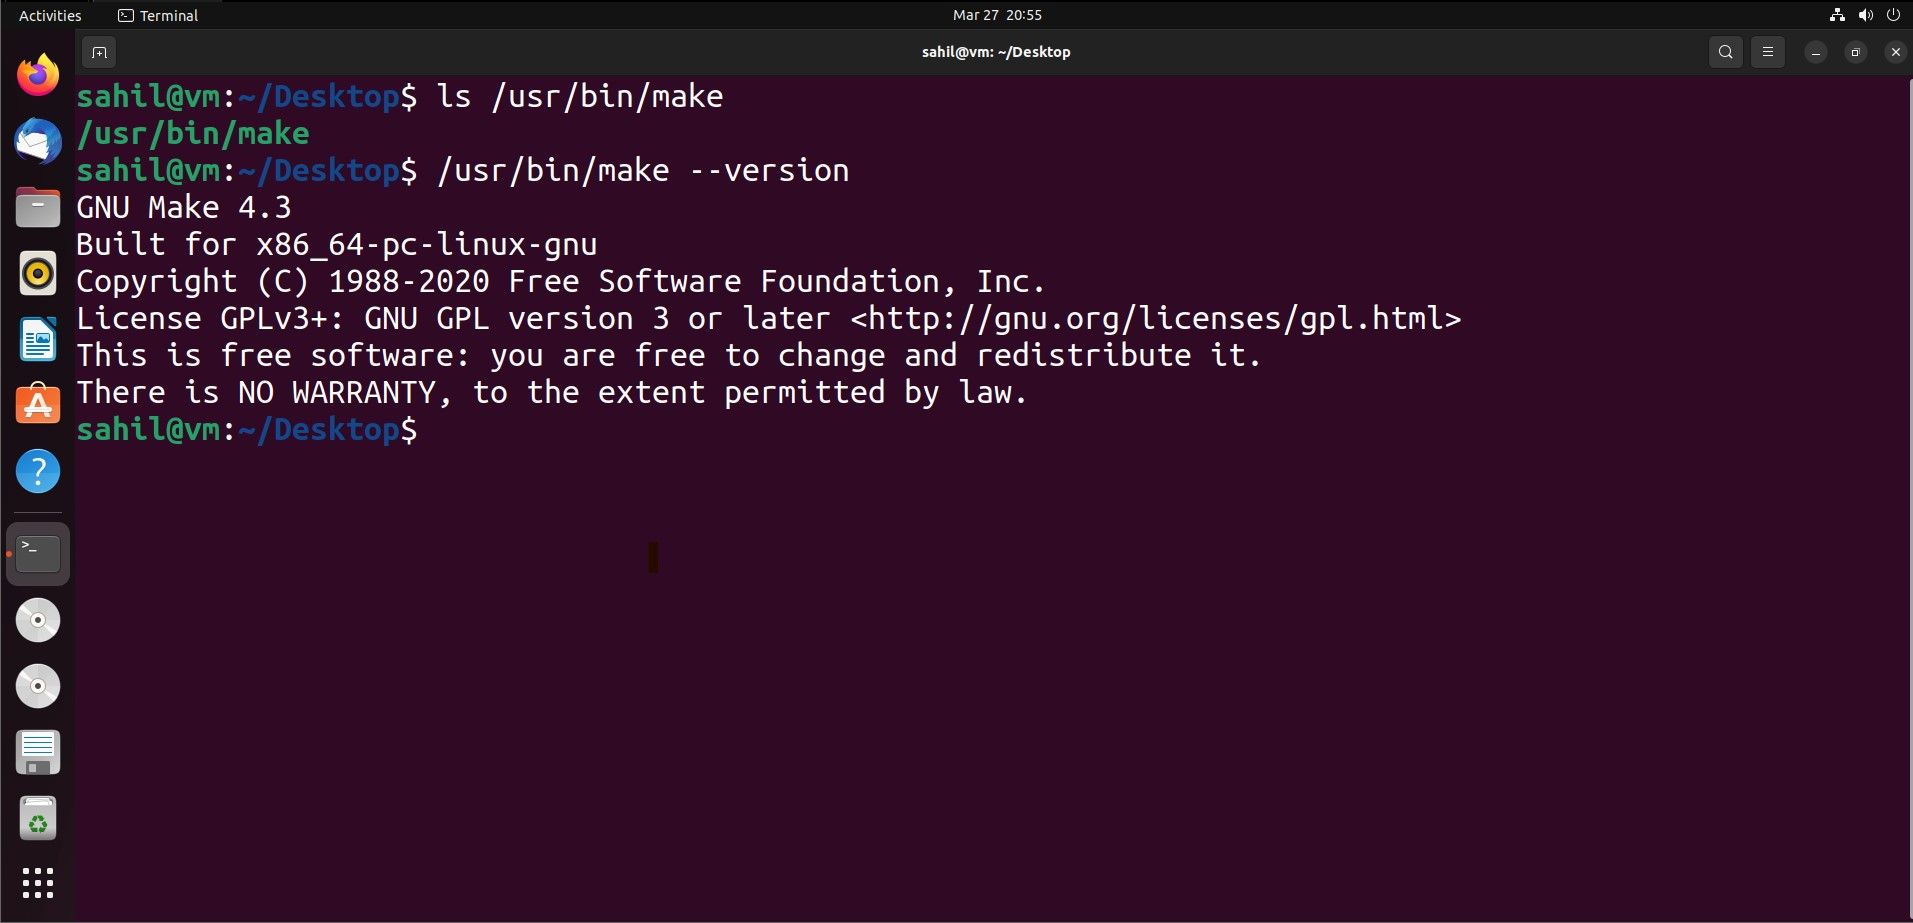 Linux Ubuntu terminal interface showing verification commands